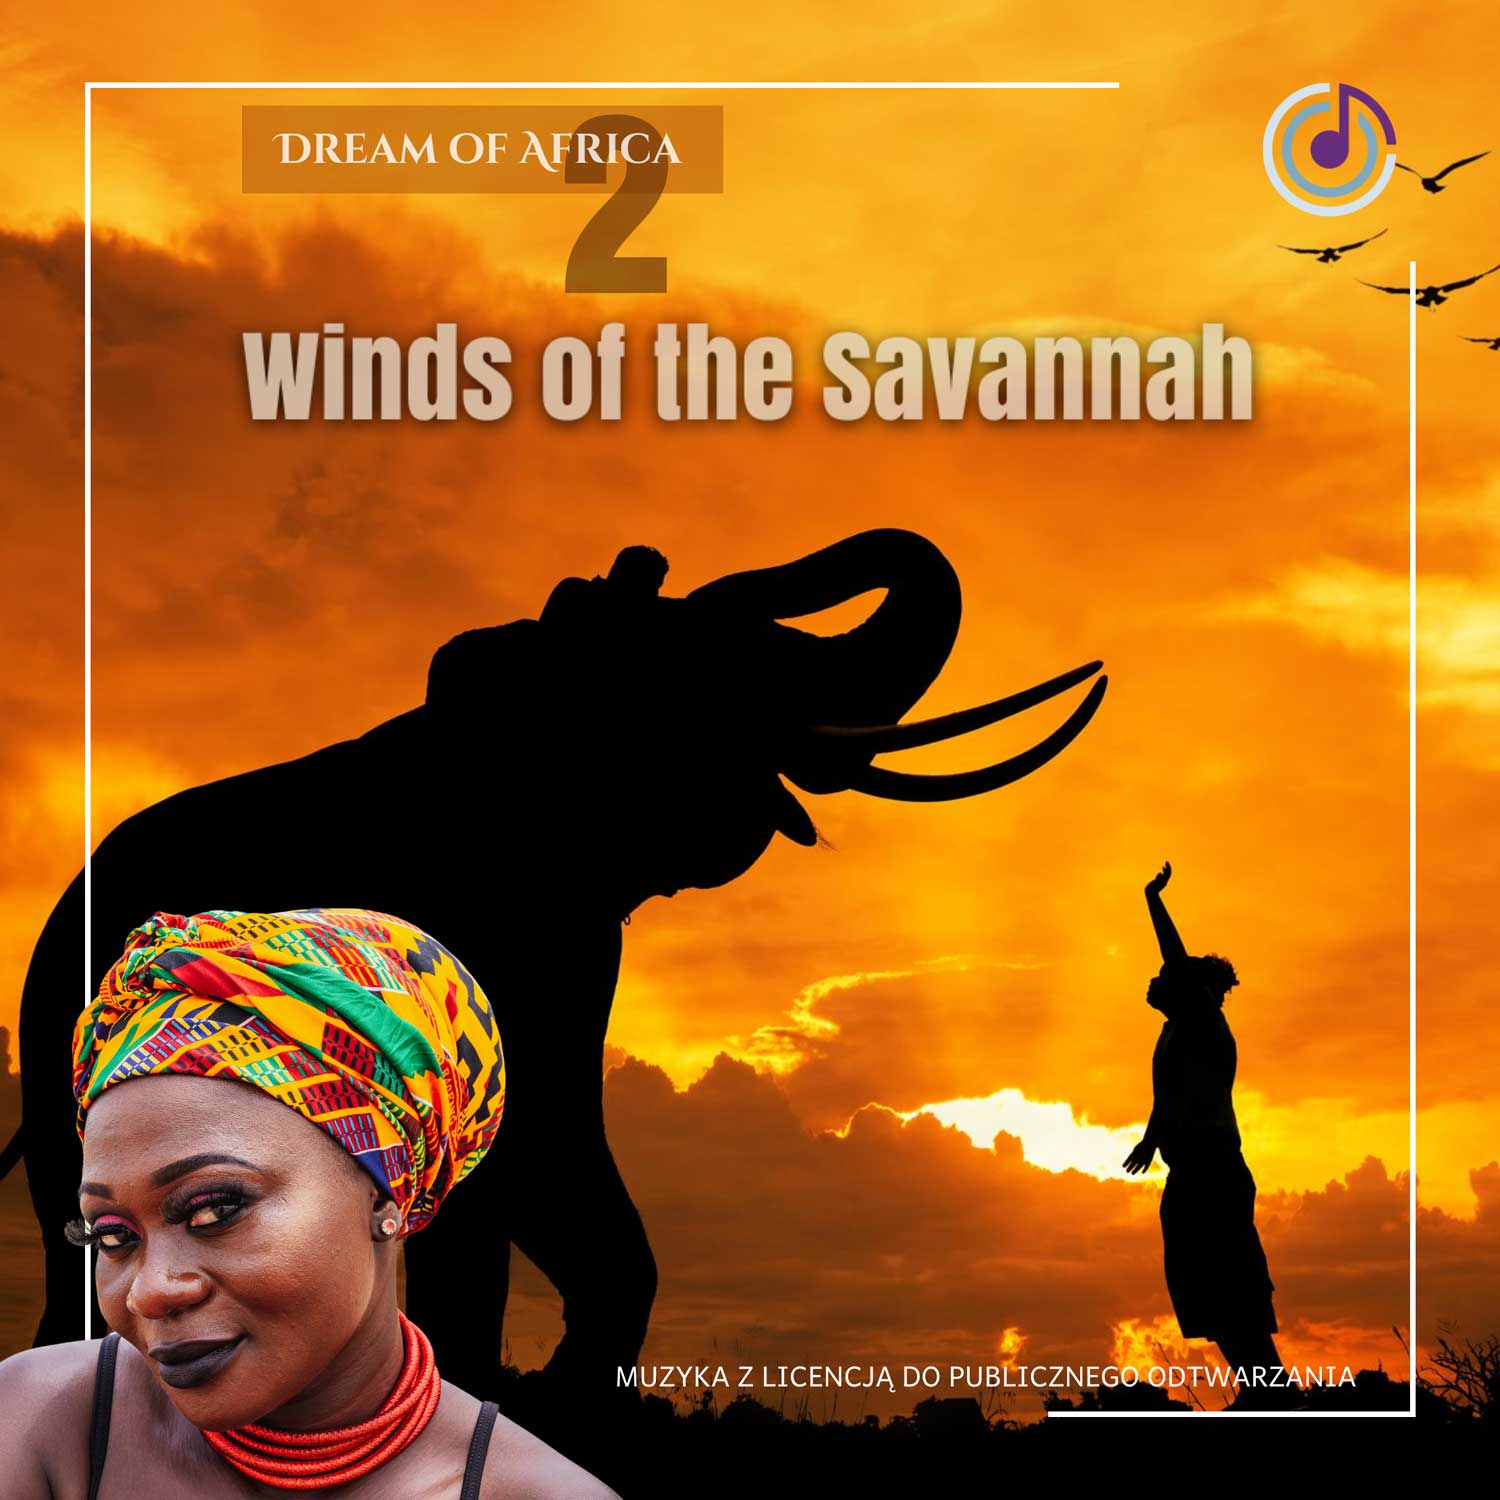 Winds of the Savannah